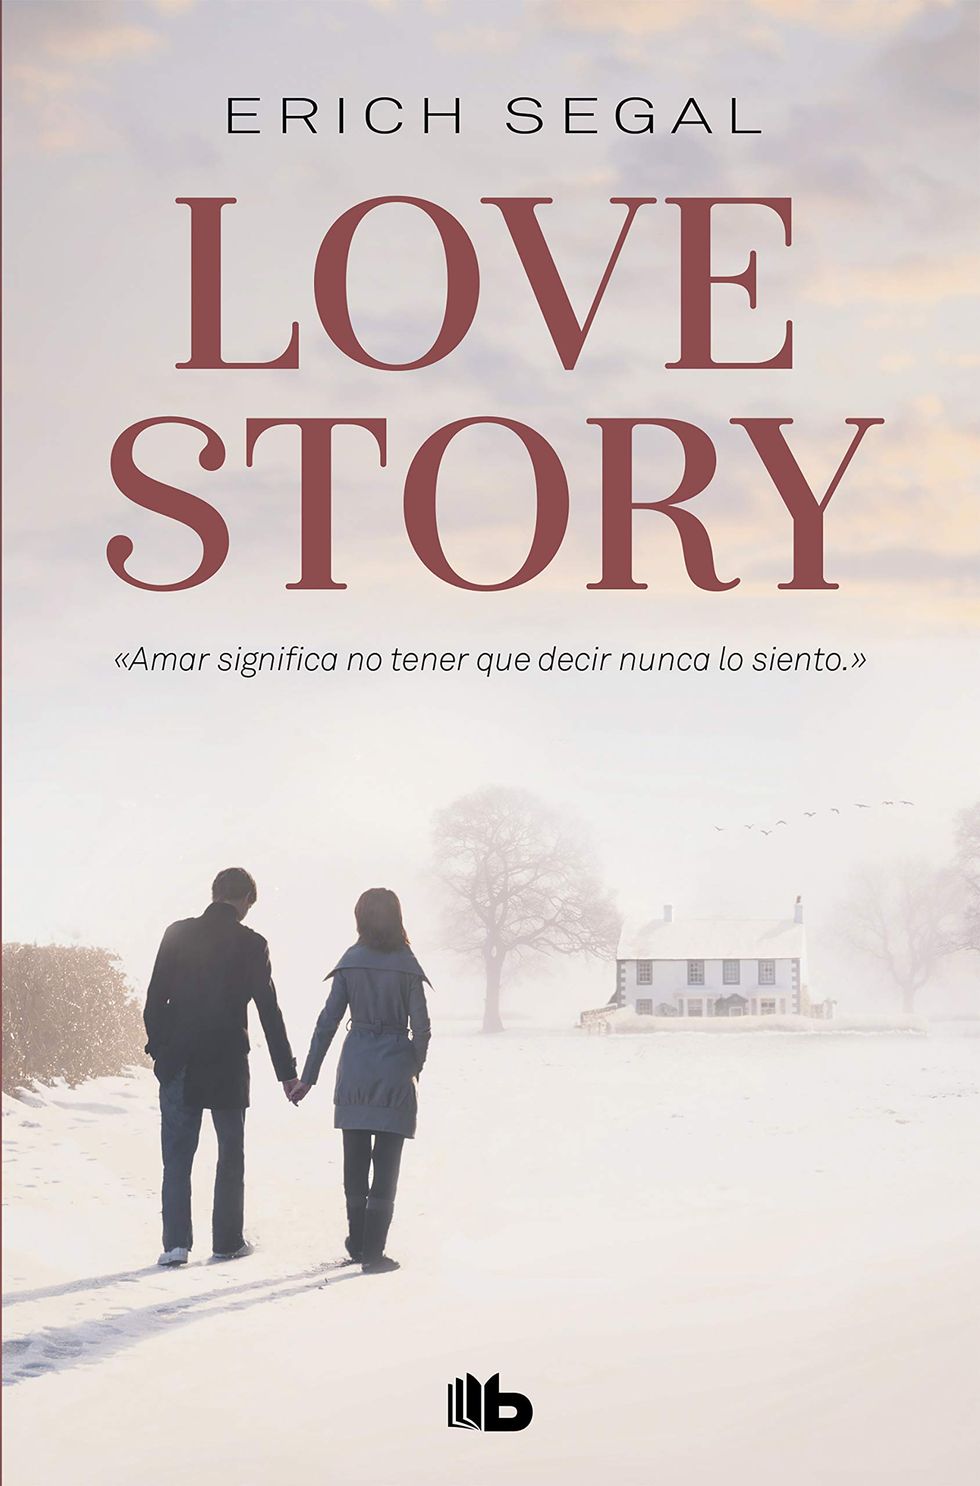 Love story book. Segal Erich "Love story". Love story книга. Love story by Erich Segal. История любви Эрих Сигал.